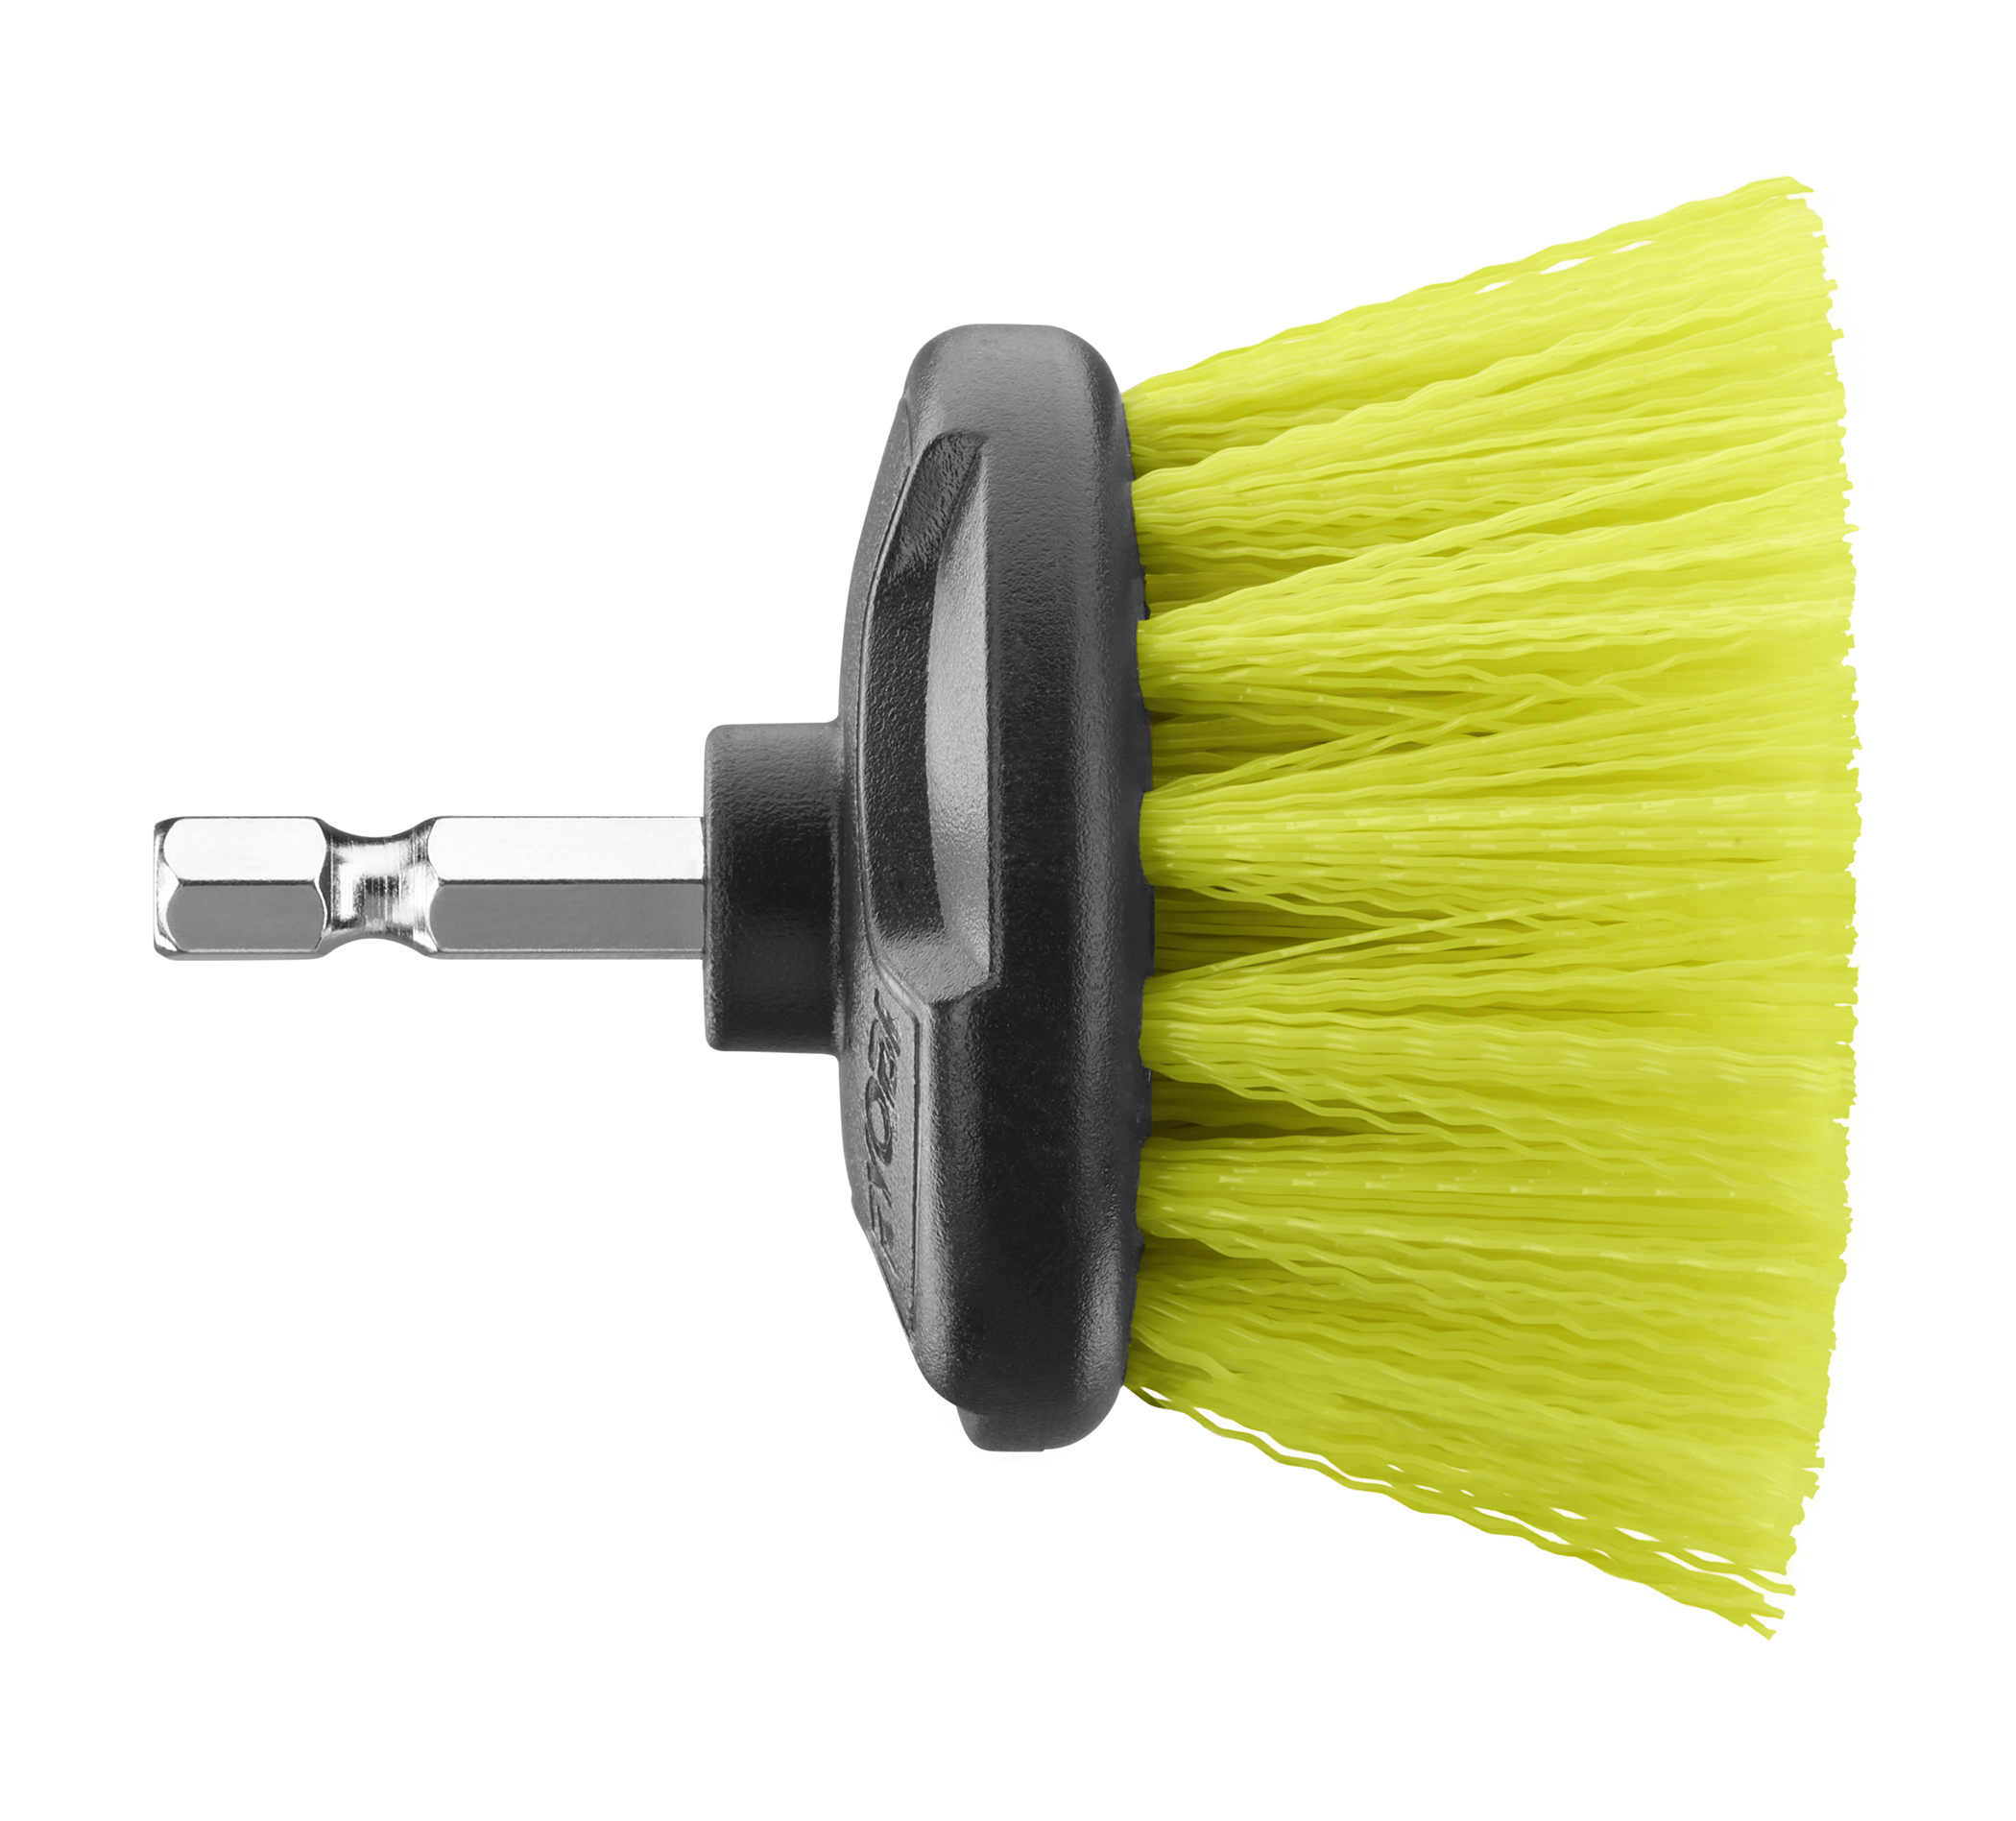 RYOBI Soft Bristle Brush Cleaning Kit (2-Piece) A95SBK1 - The Home